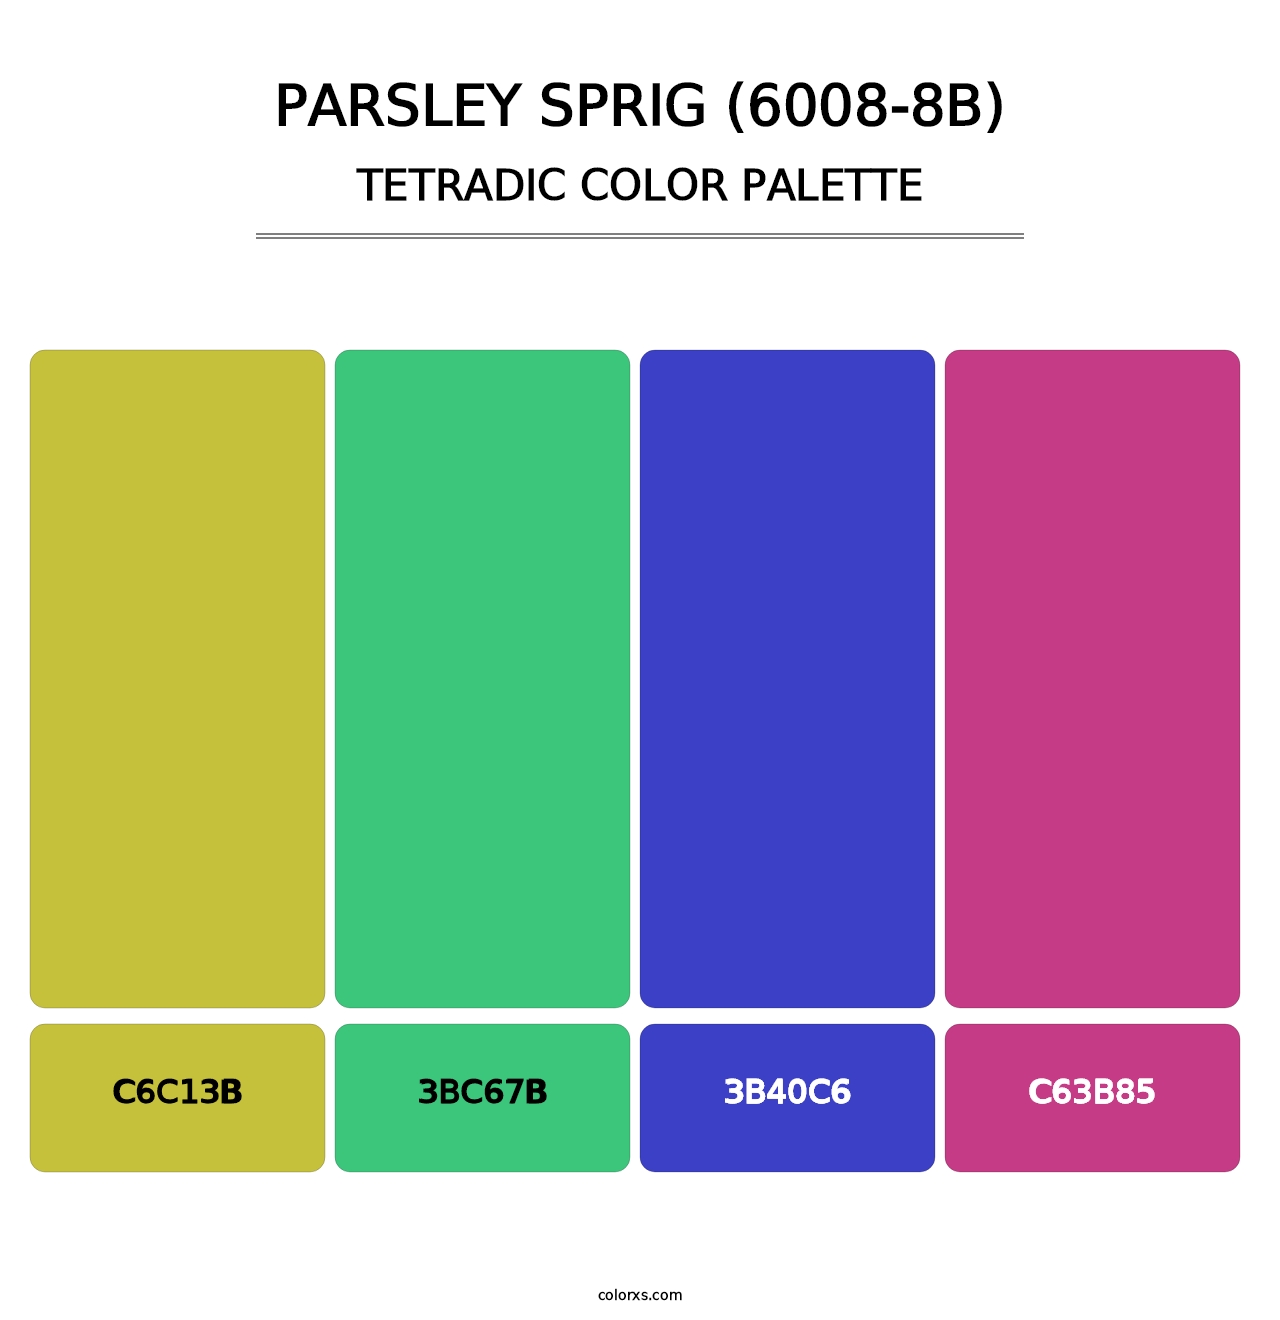 Parsley Sprig (6008-8B) - Tetradic Color Palette